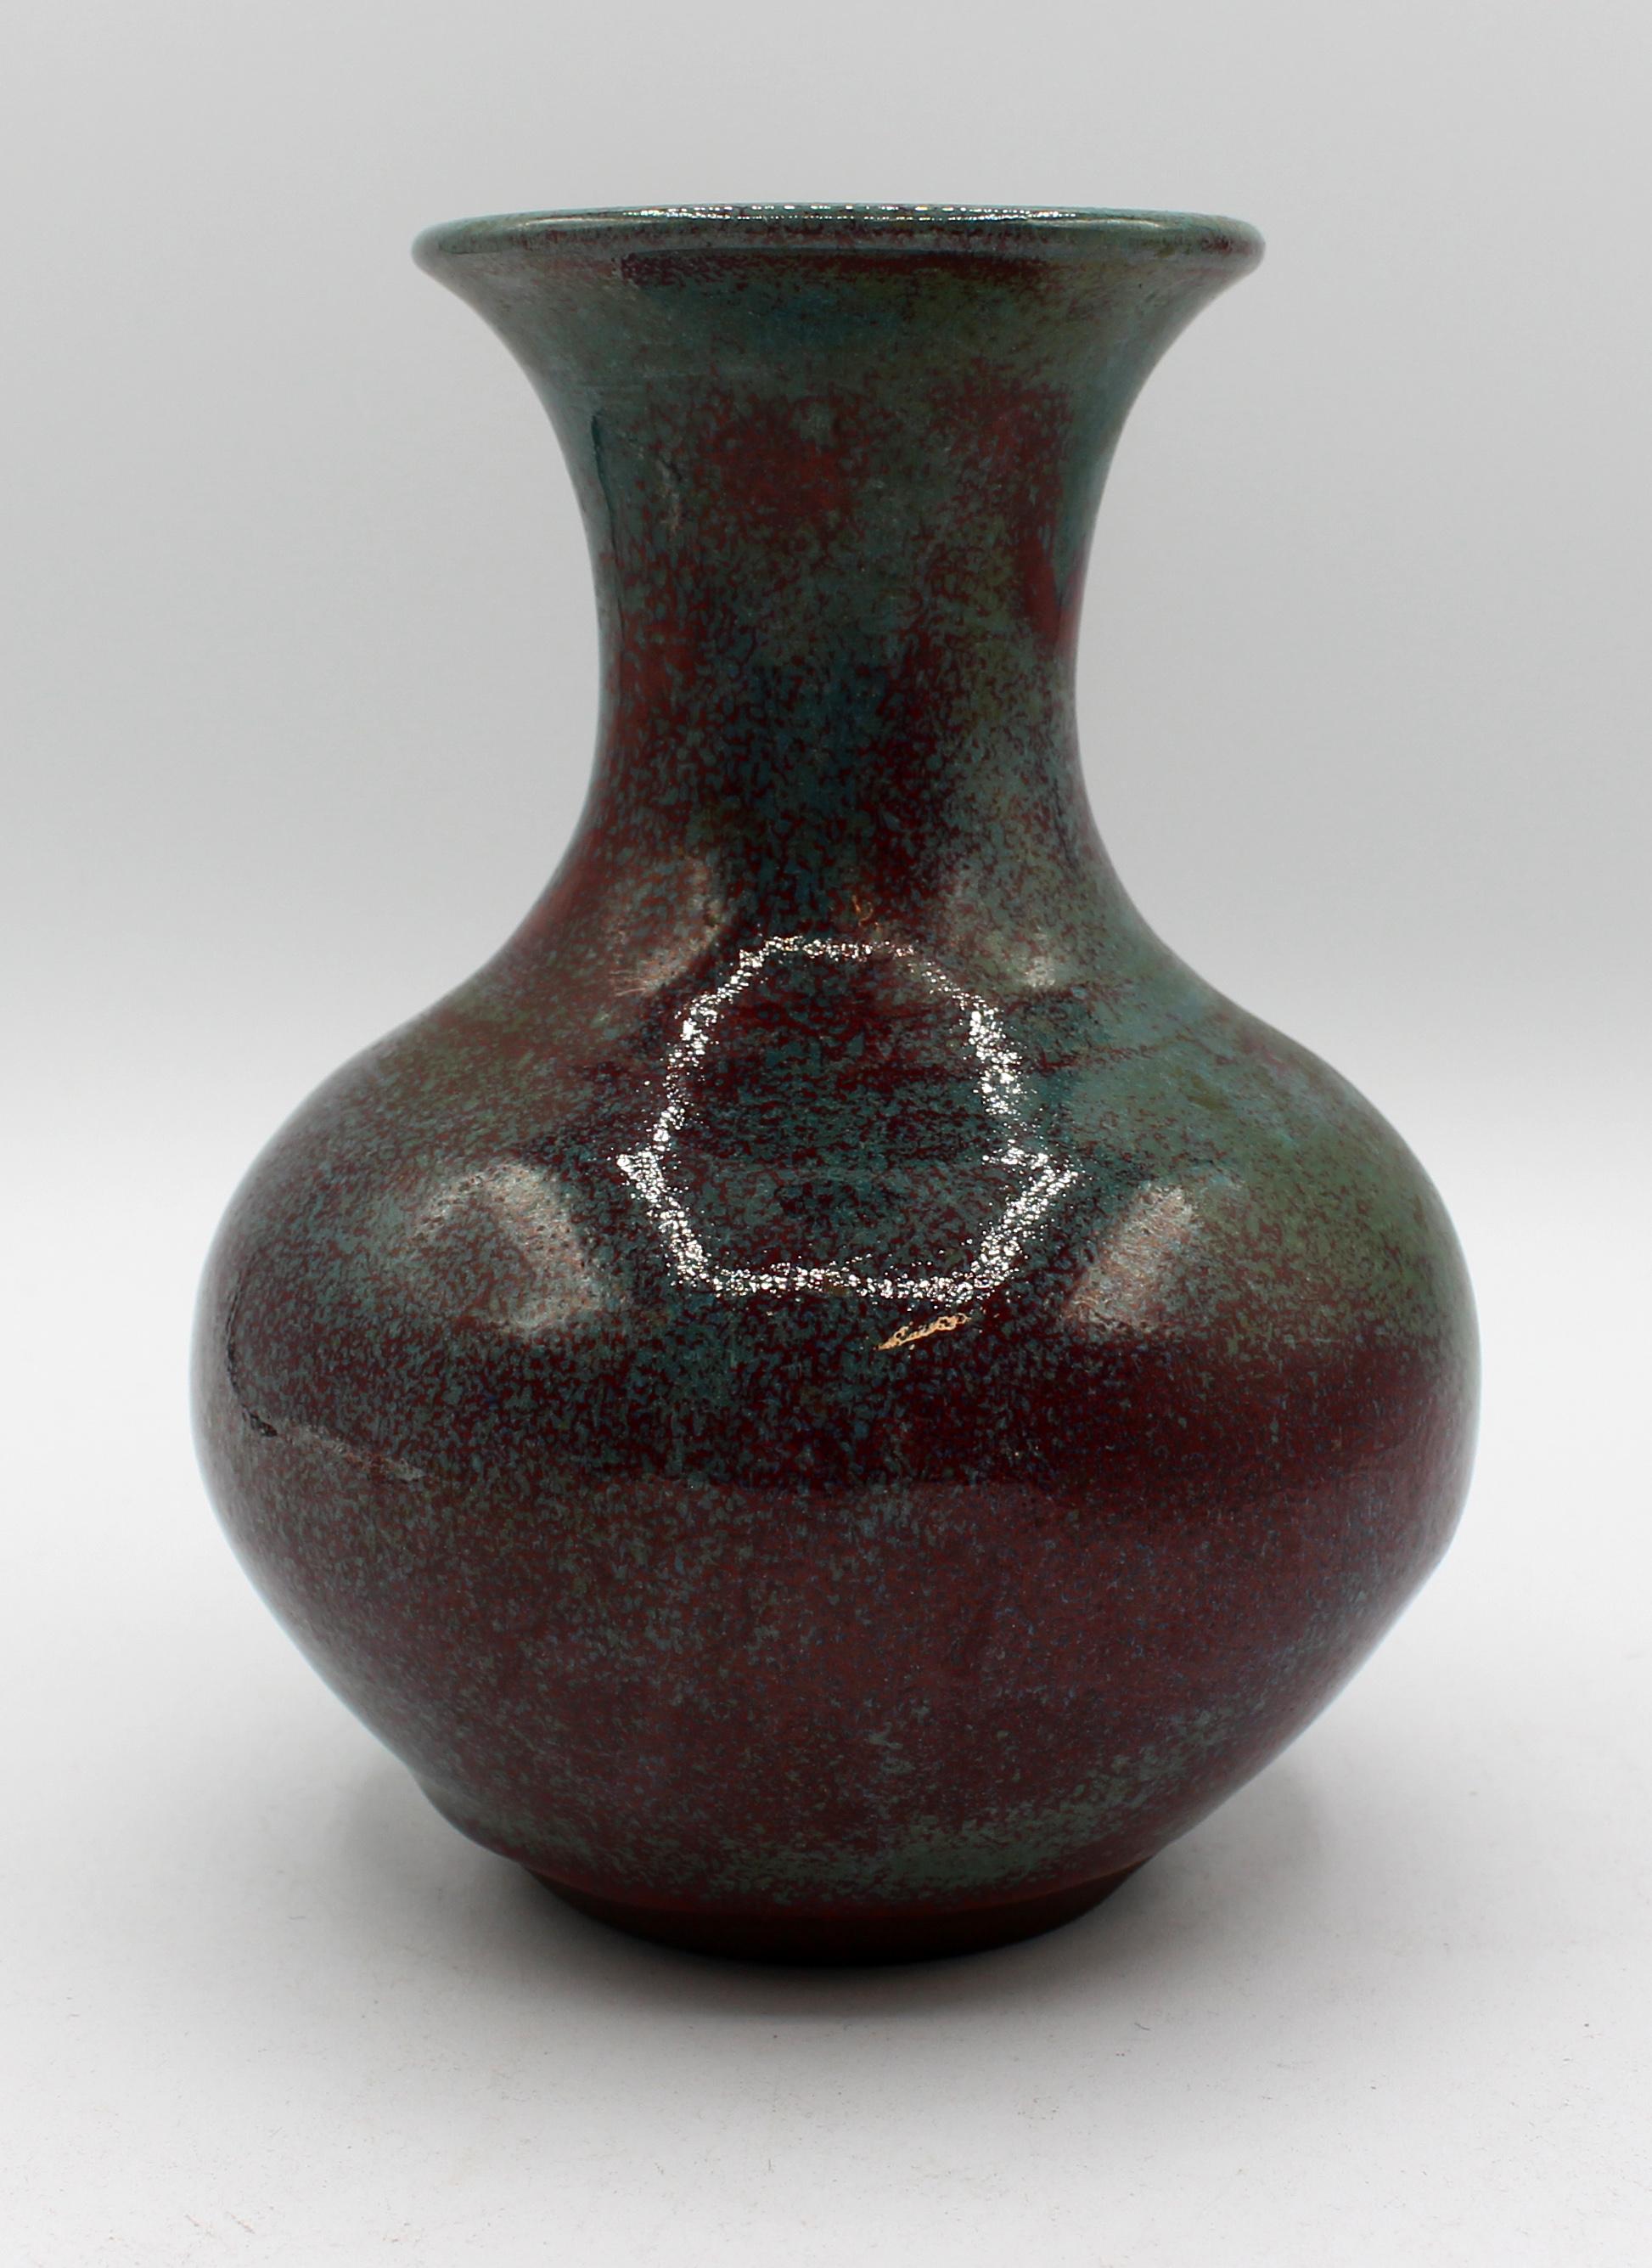 1988 Jugtown Oriental Translation Vase aus blauer & Sang de Boeuf Glasur. Kreisförmige Jugtown Ware eingeprägte Marke & eingeprägtes Datum. 6 1/4